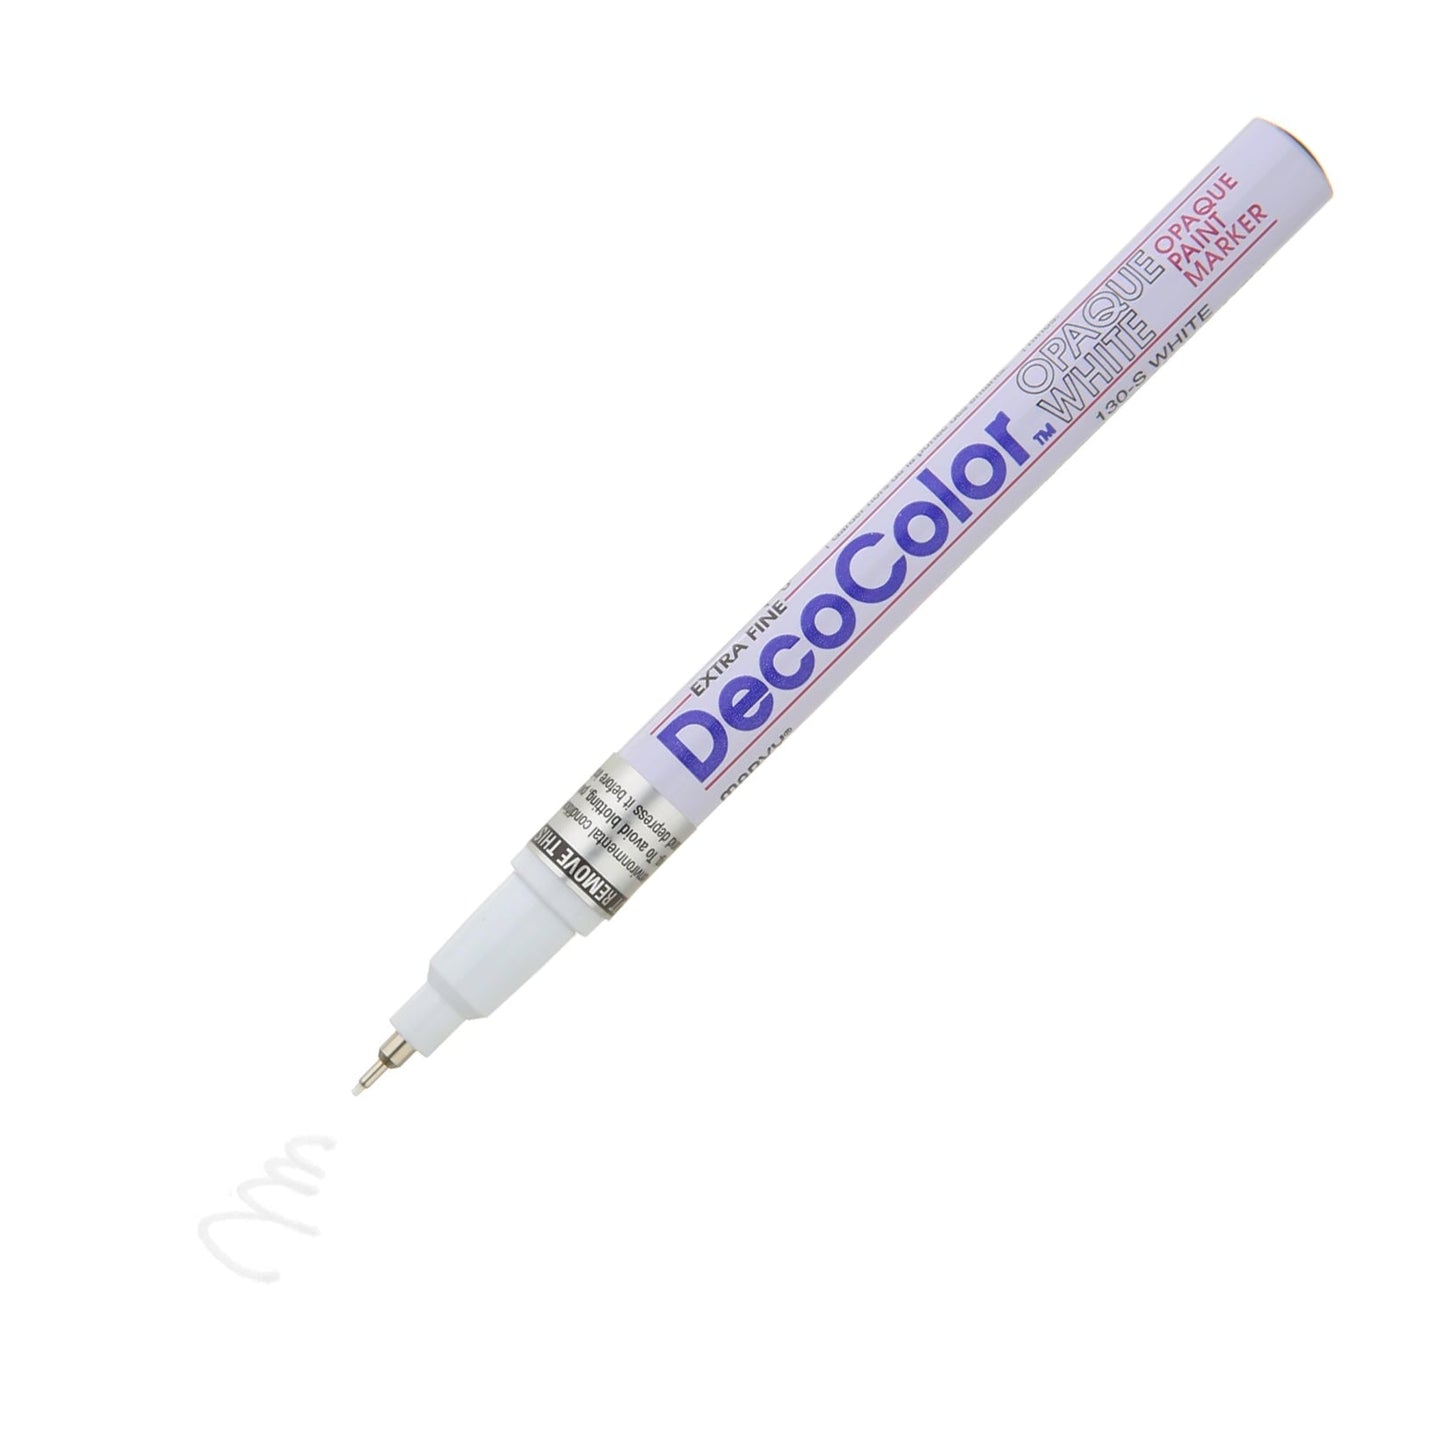 Marqueur peinture Decocolor, pointe Specialtech extra fine 0,8 mm